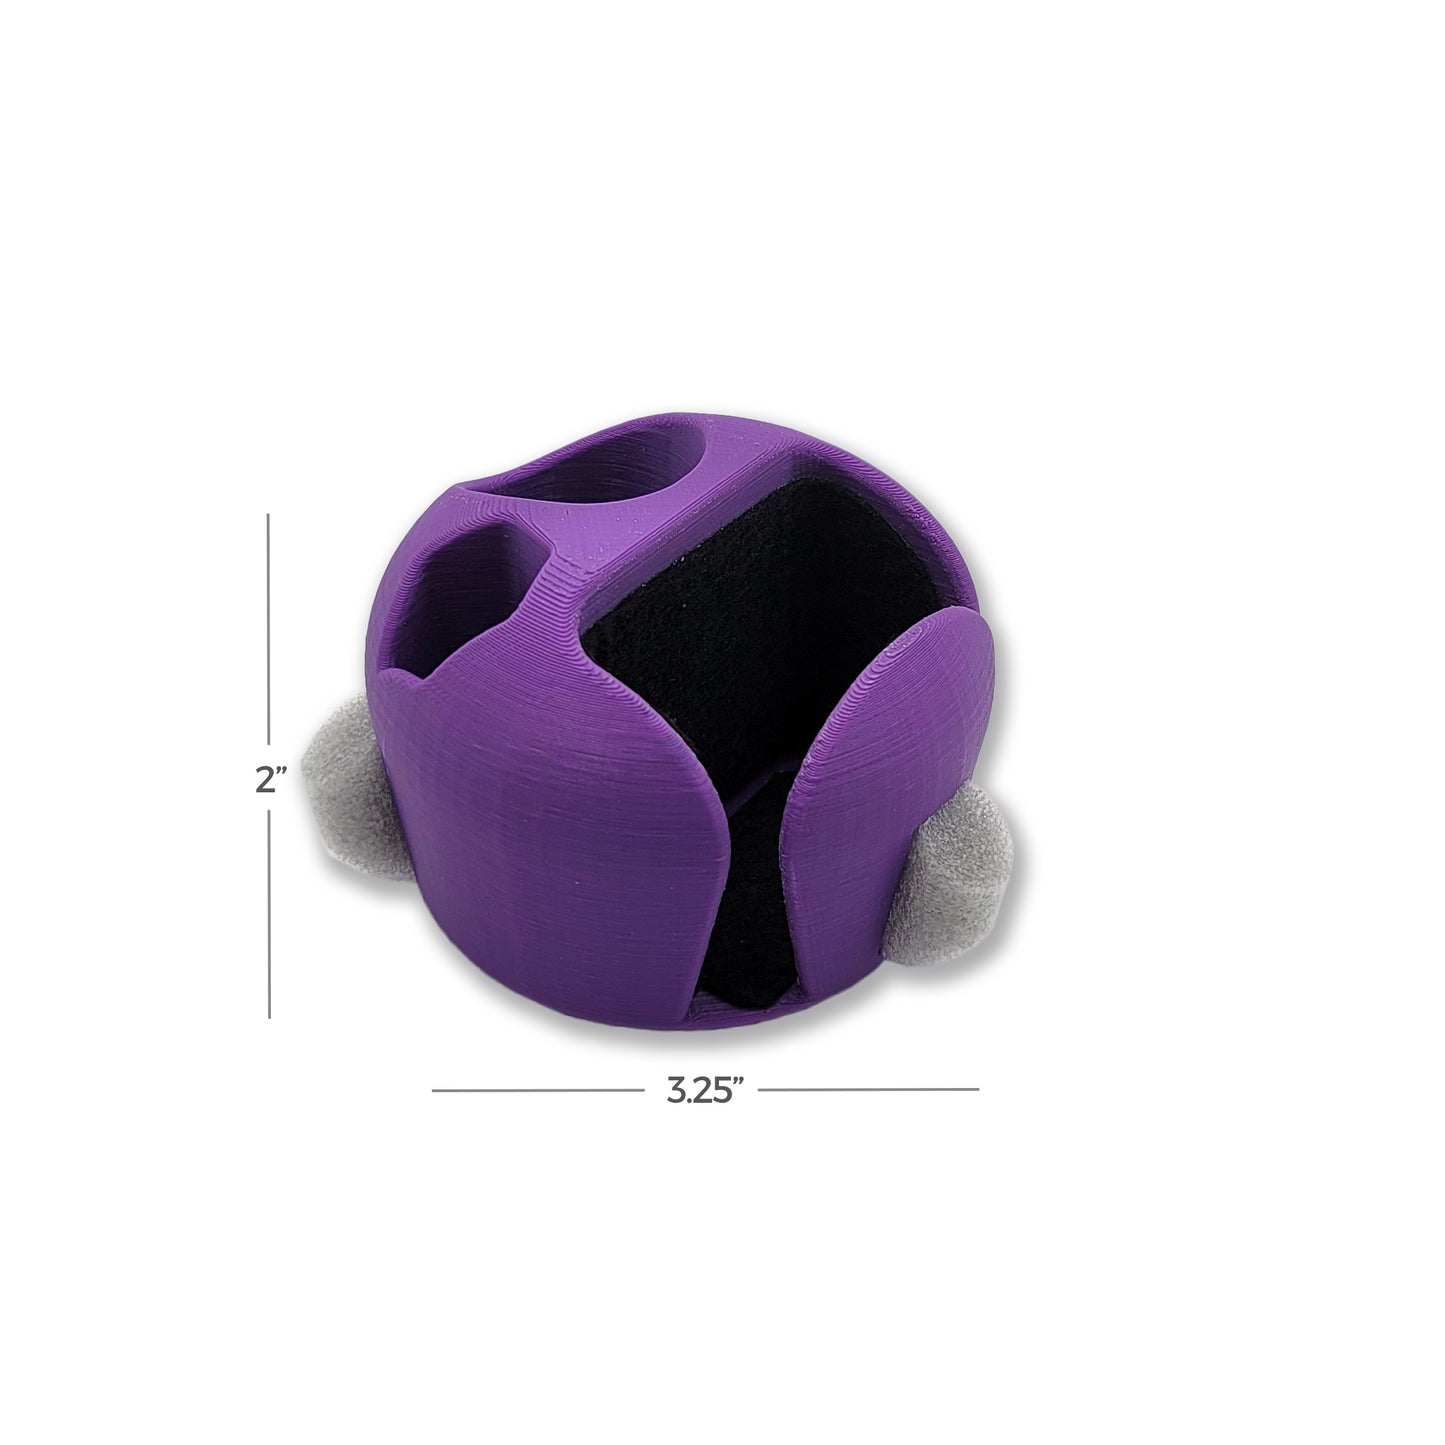 VAPE STAND - Cup Holder Stand / Puck | MOD Box Vape Device (3D PRINTED)